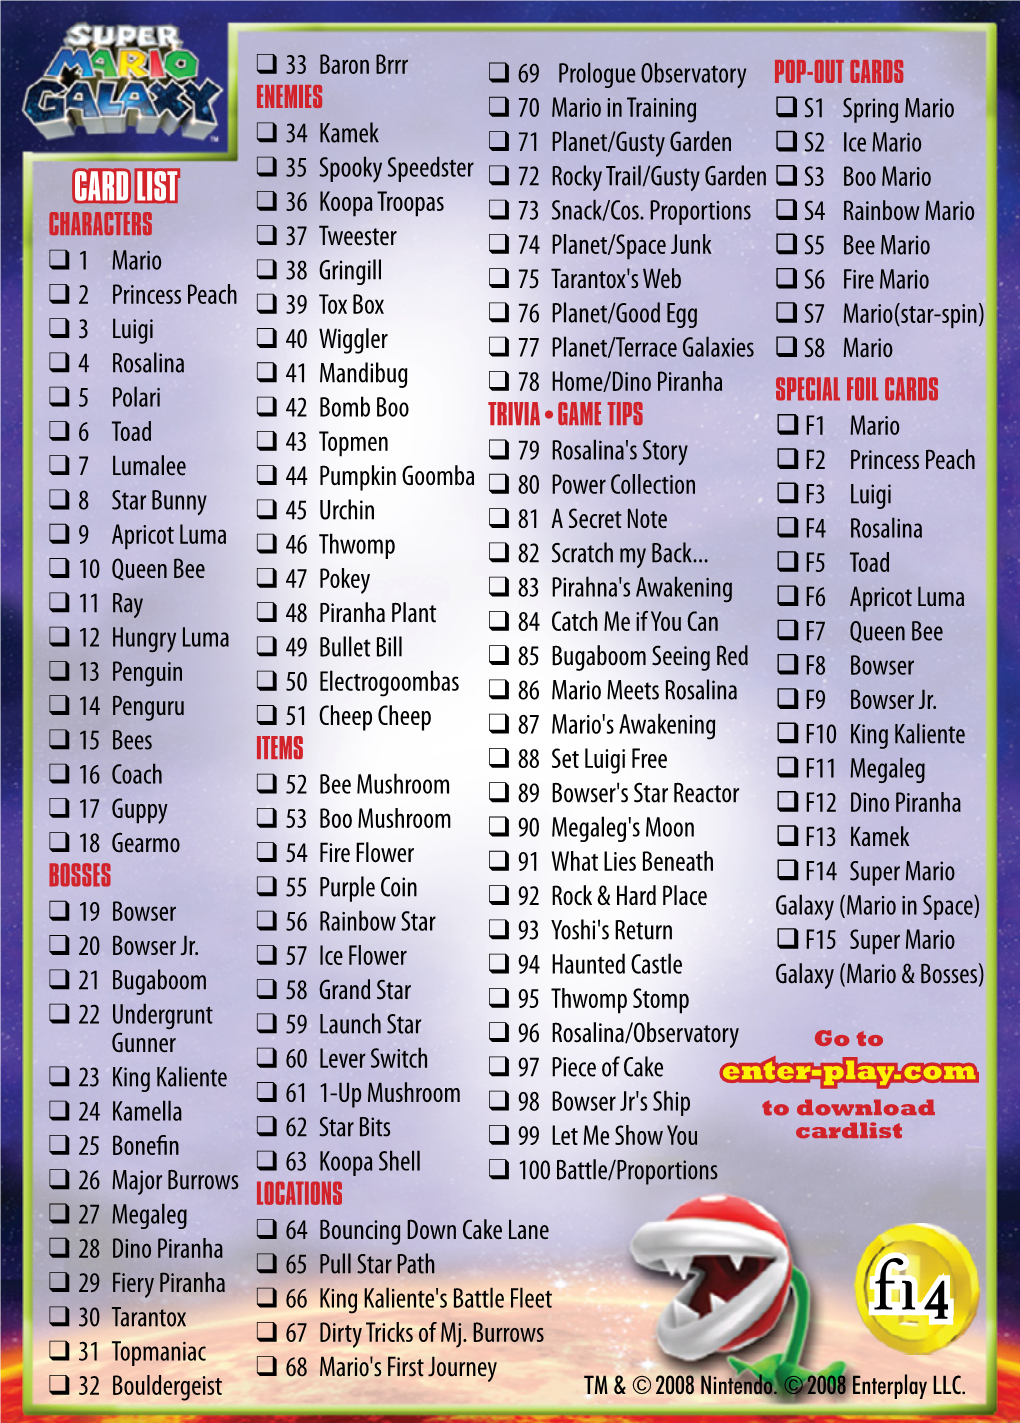 Card List ❑ 72 Rocky Trail/Gusty Garden  S3 Boo Mario ❑ 36 Koopa Troopas ❑ 73 Snack/Cos